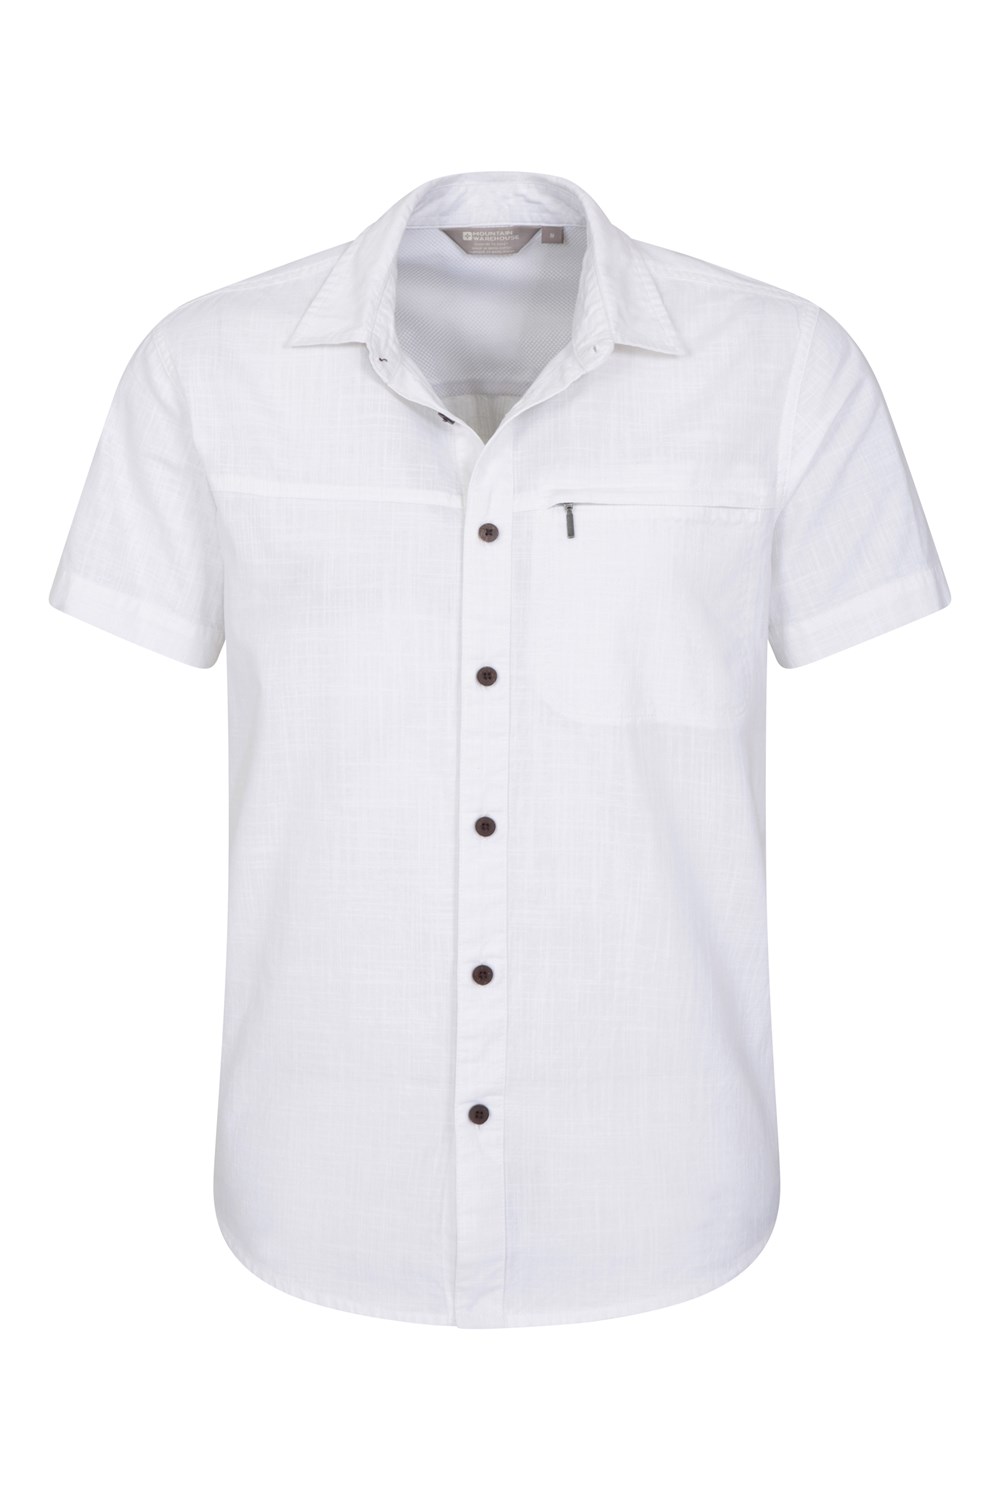 Mountain Warehouse Men Coconut Slub Texture Short Sleeve Shirt | eBay